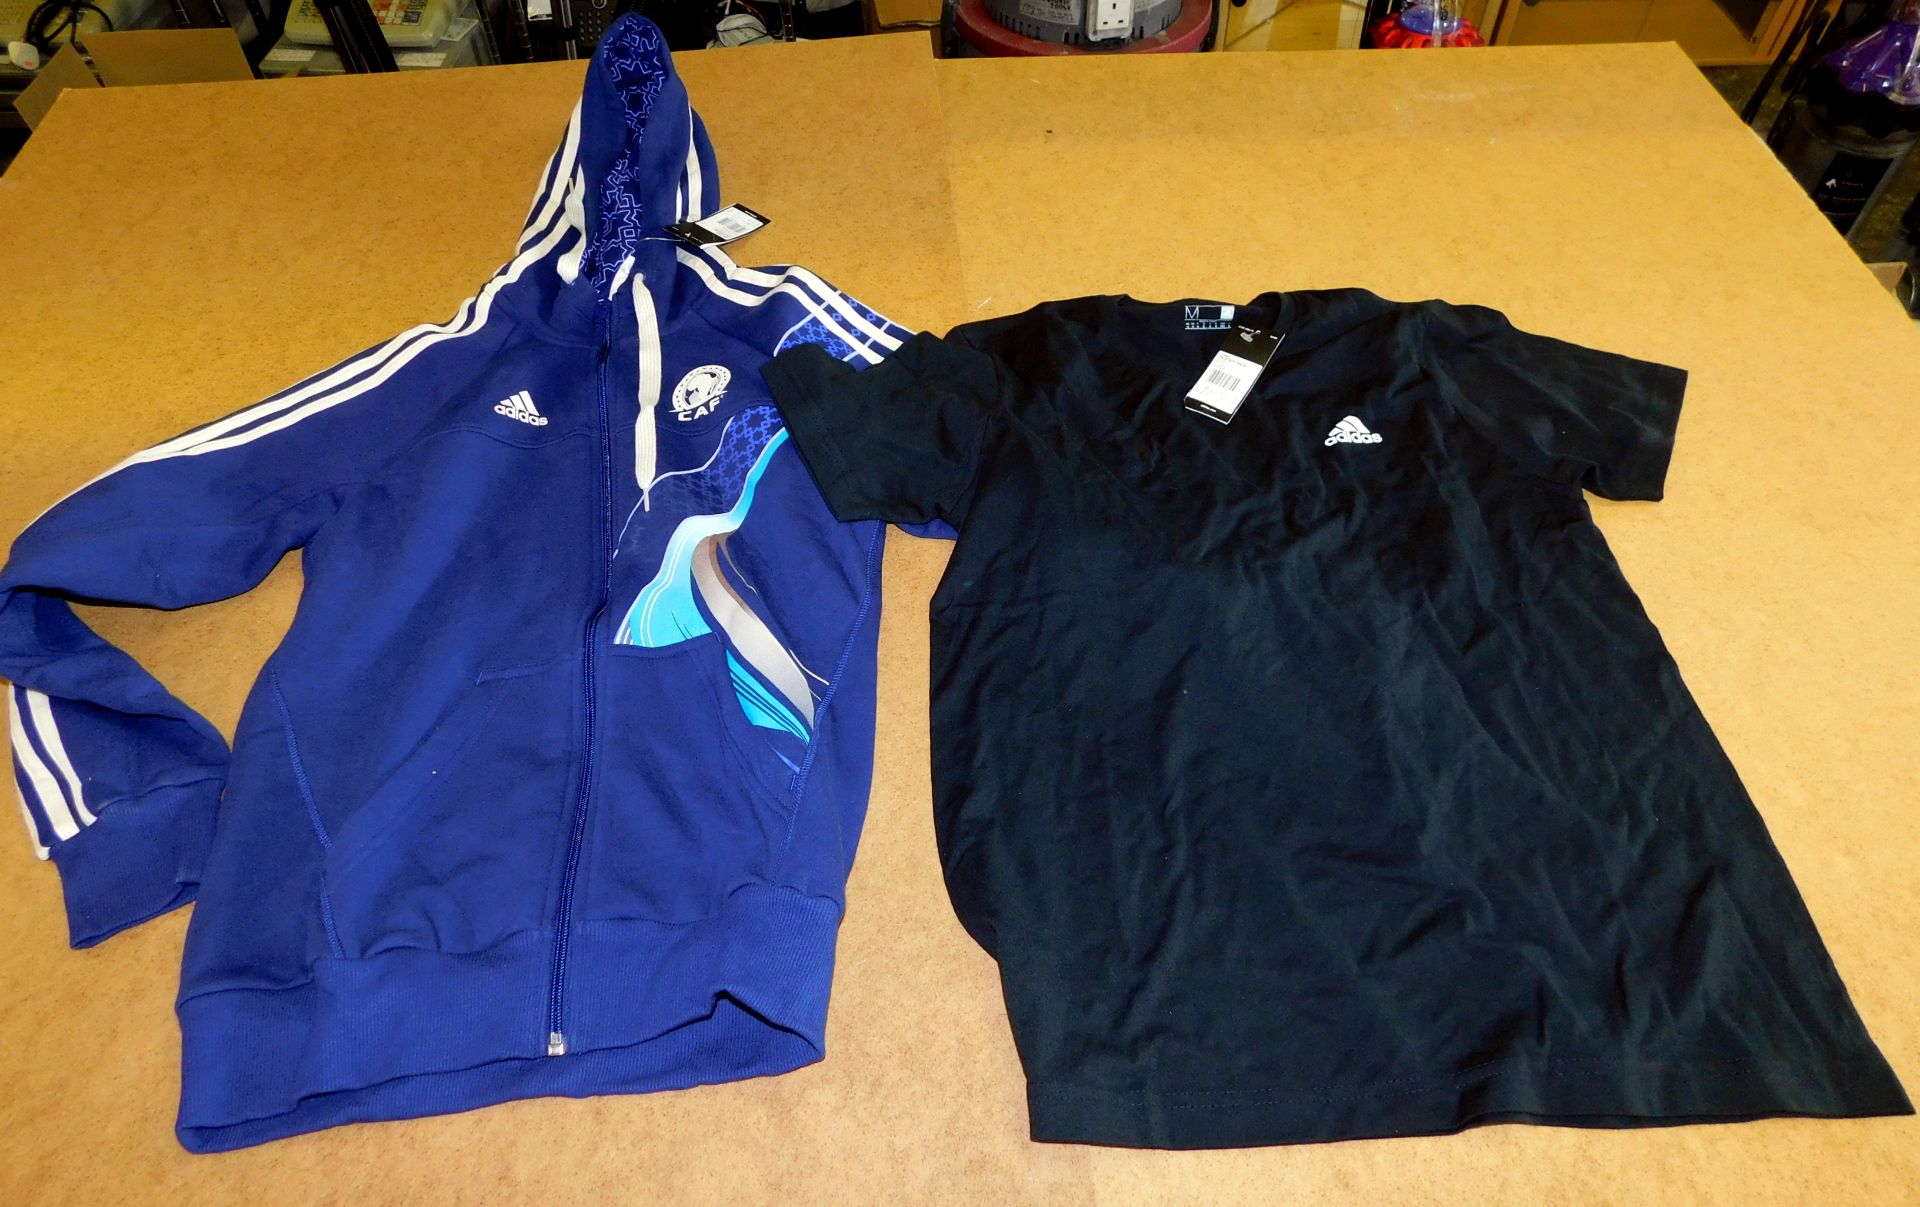 170 Adidas Garments (118 Team Staff Tee, 10 Volunteer CAF Hoodie, 42 Portugal Tee Shirt) (Located